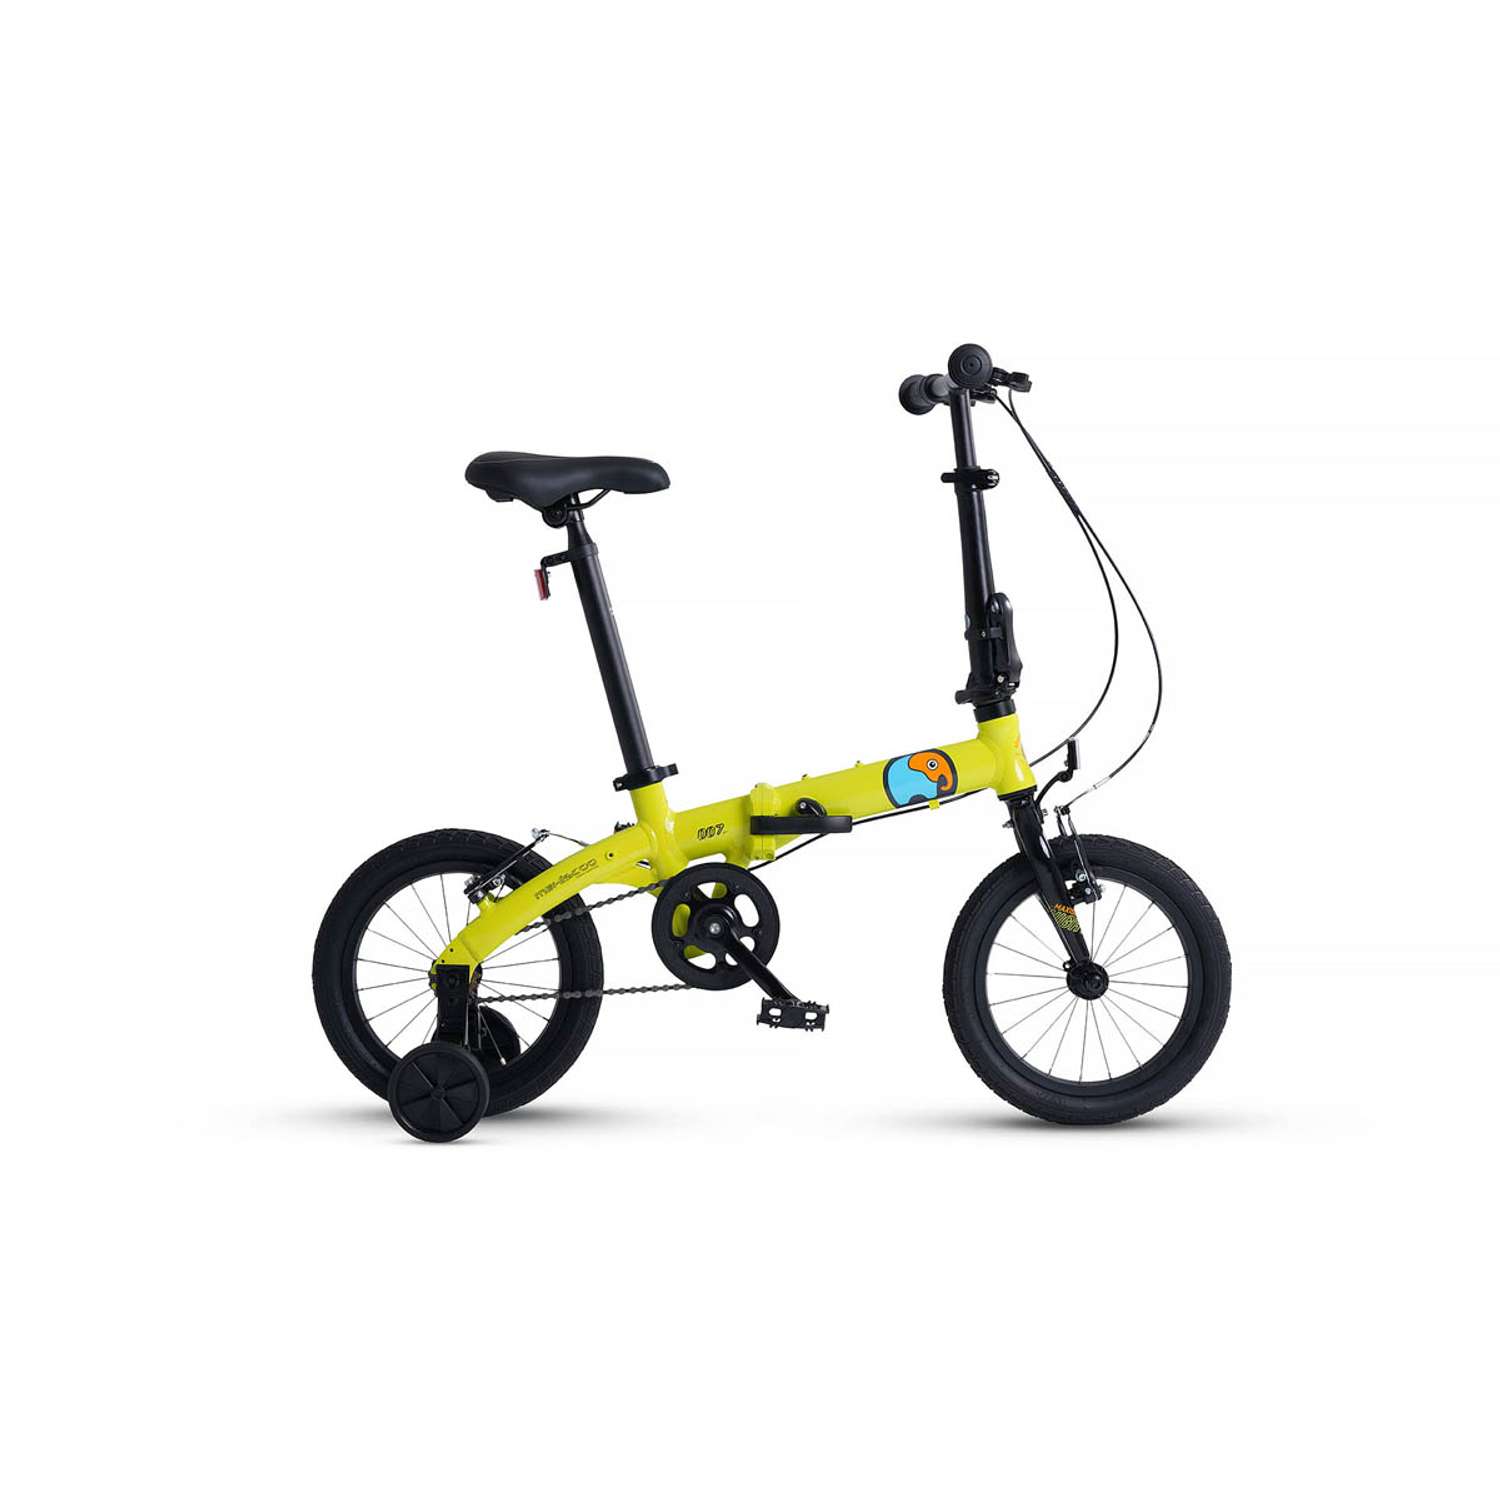 Велосипед Детский Складной Maxiscoo S007 стандарт 14 желтый - фото 1